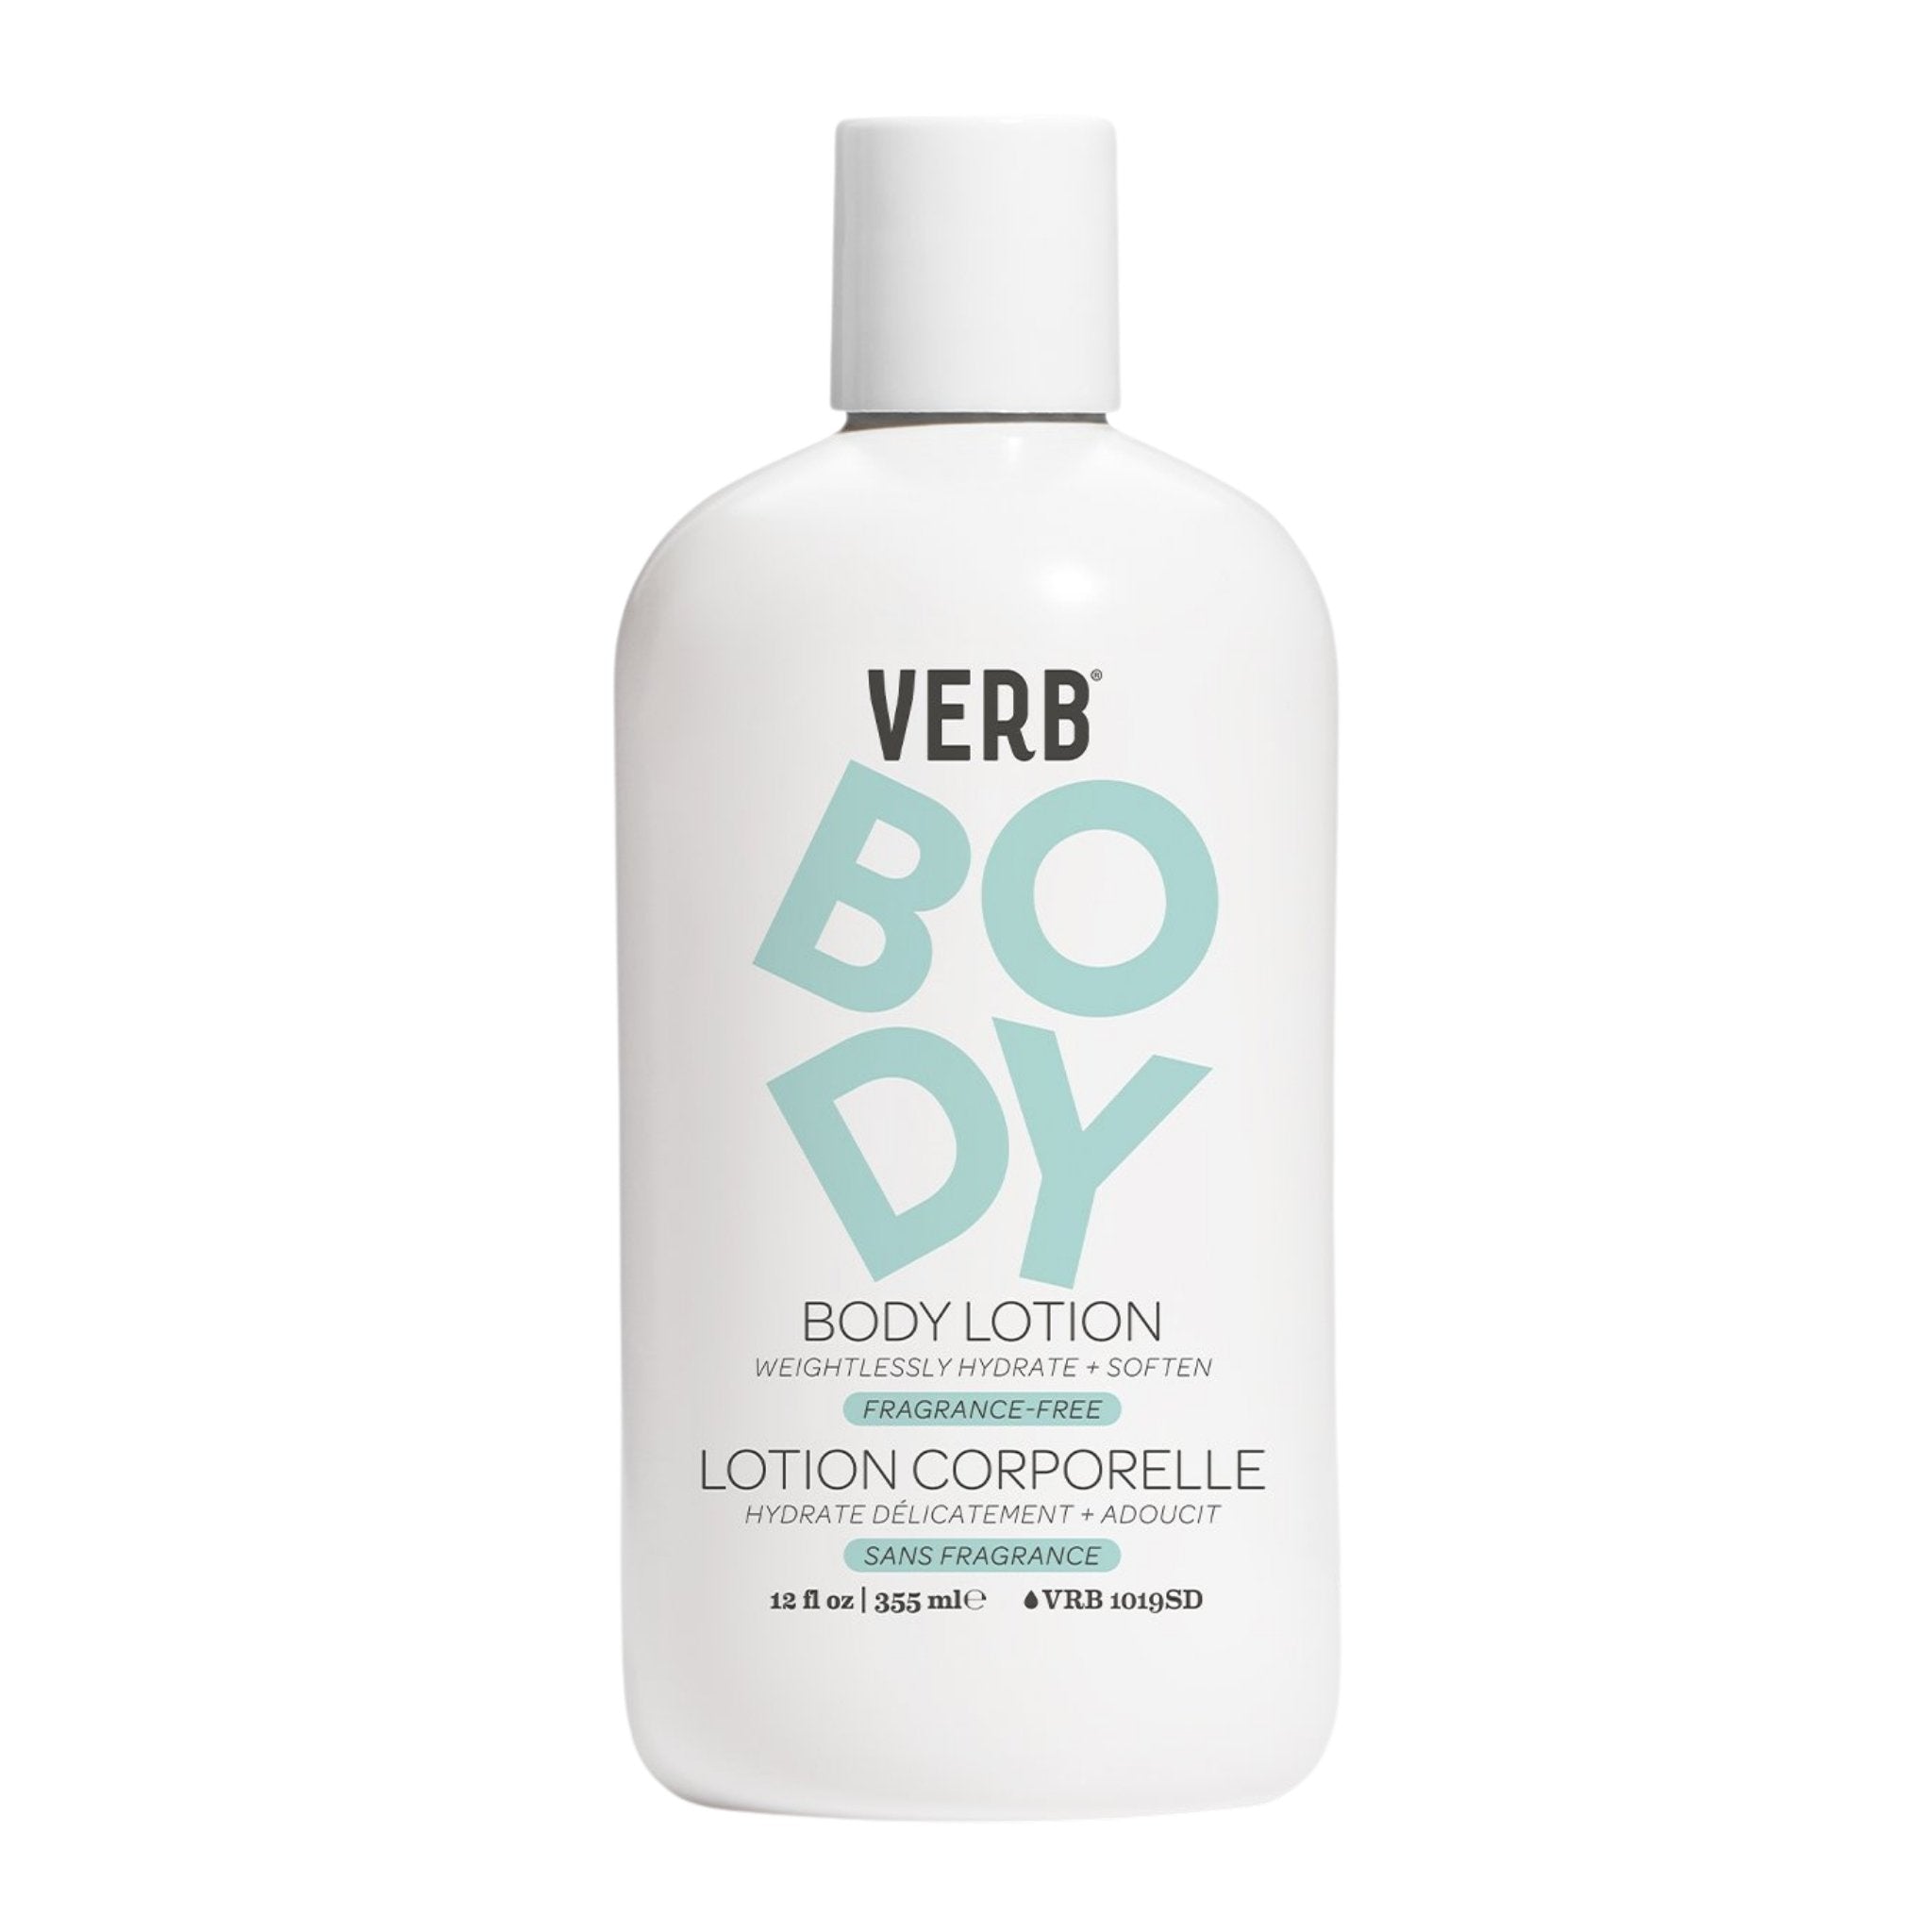 Verb. Body Lotion Corporelle - 355 ml - Concept C. Shop